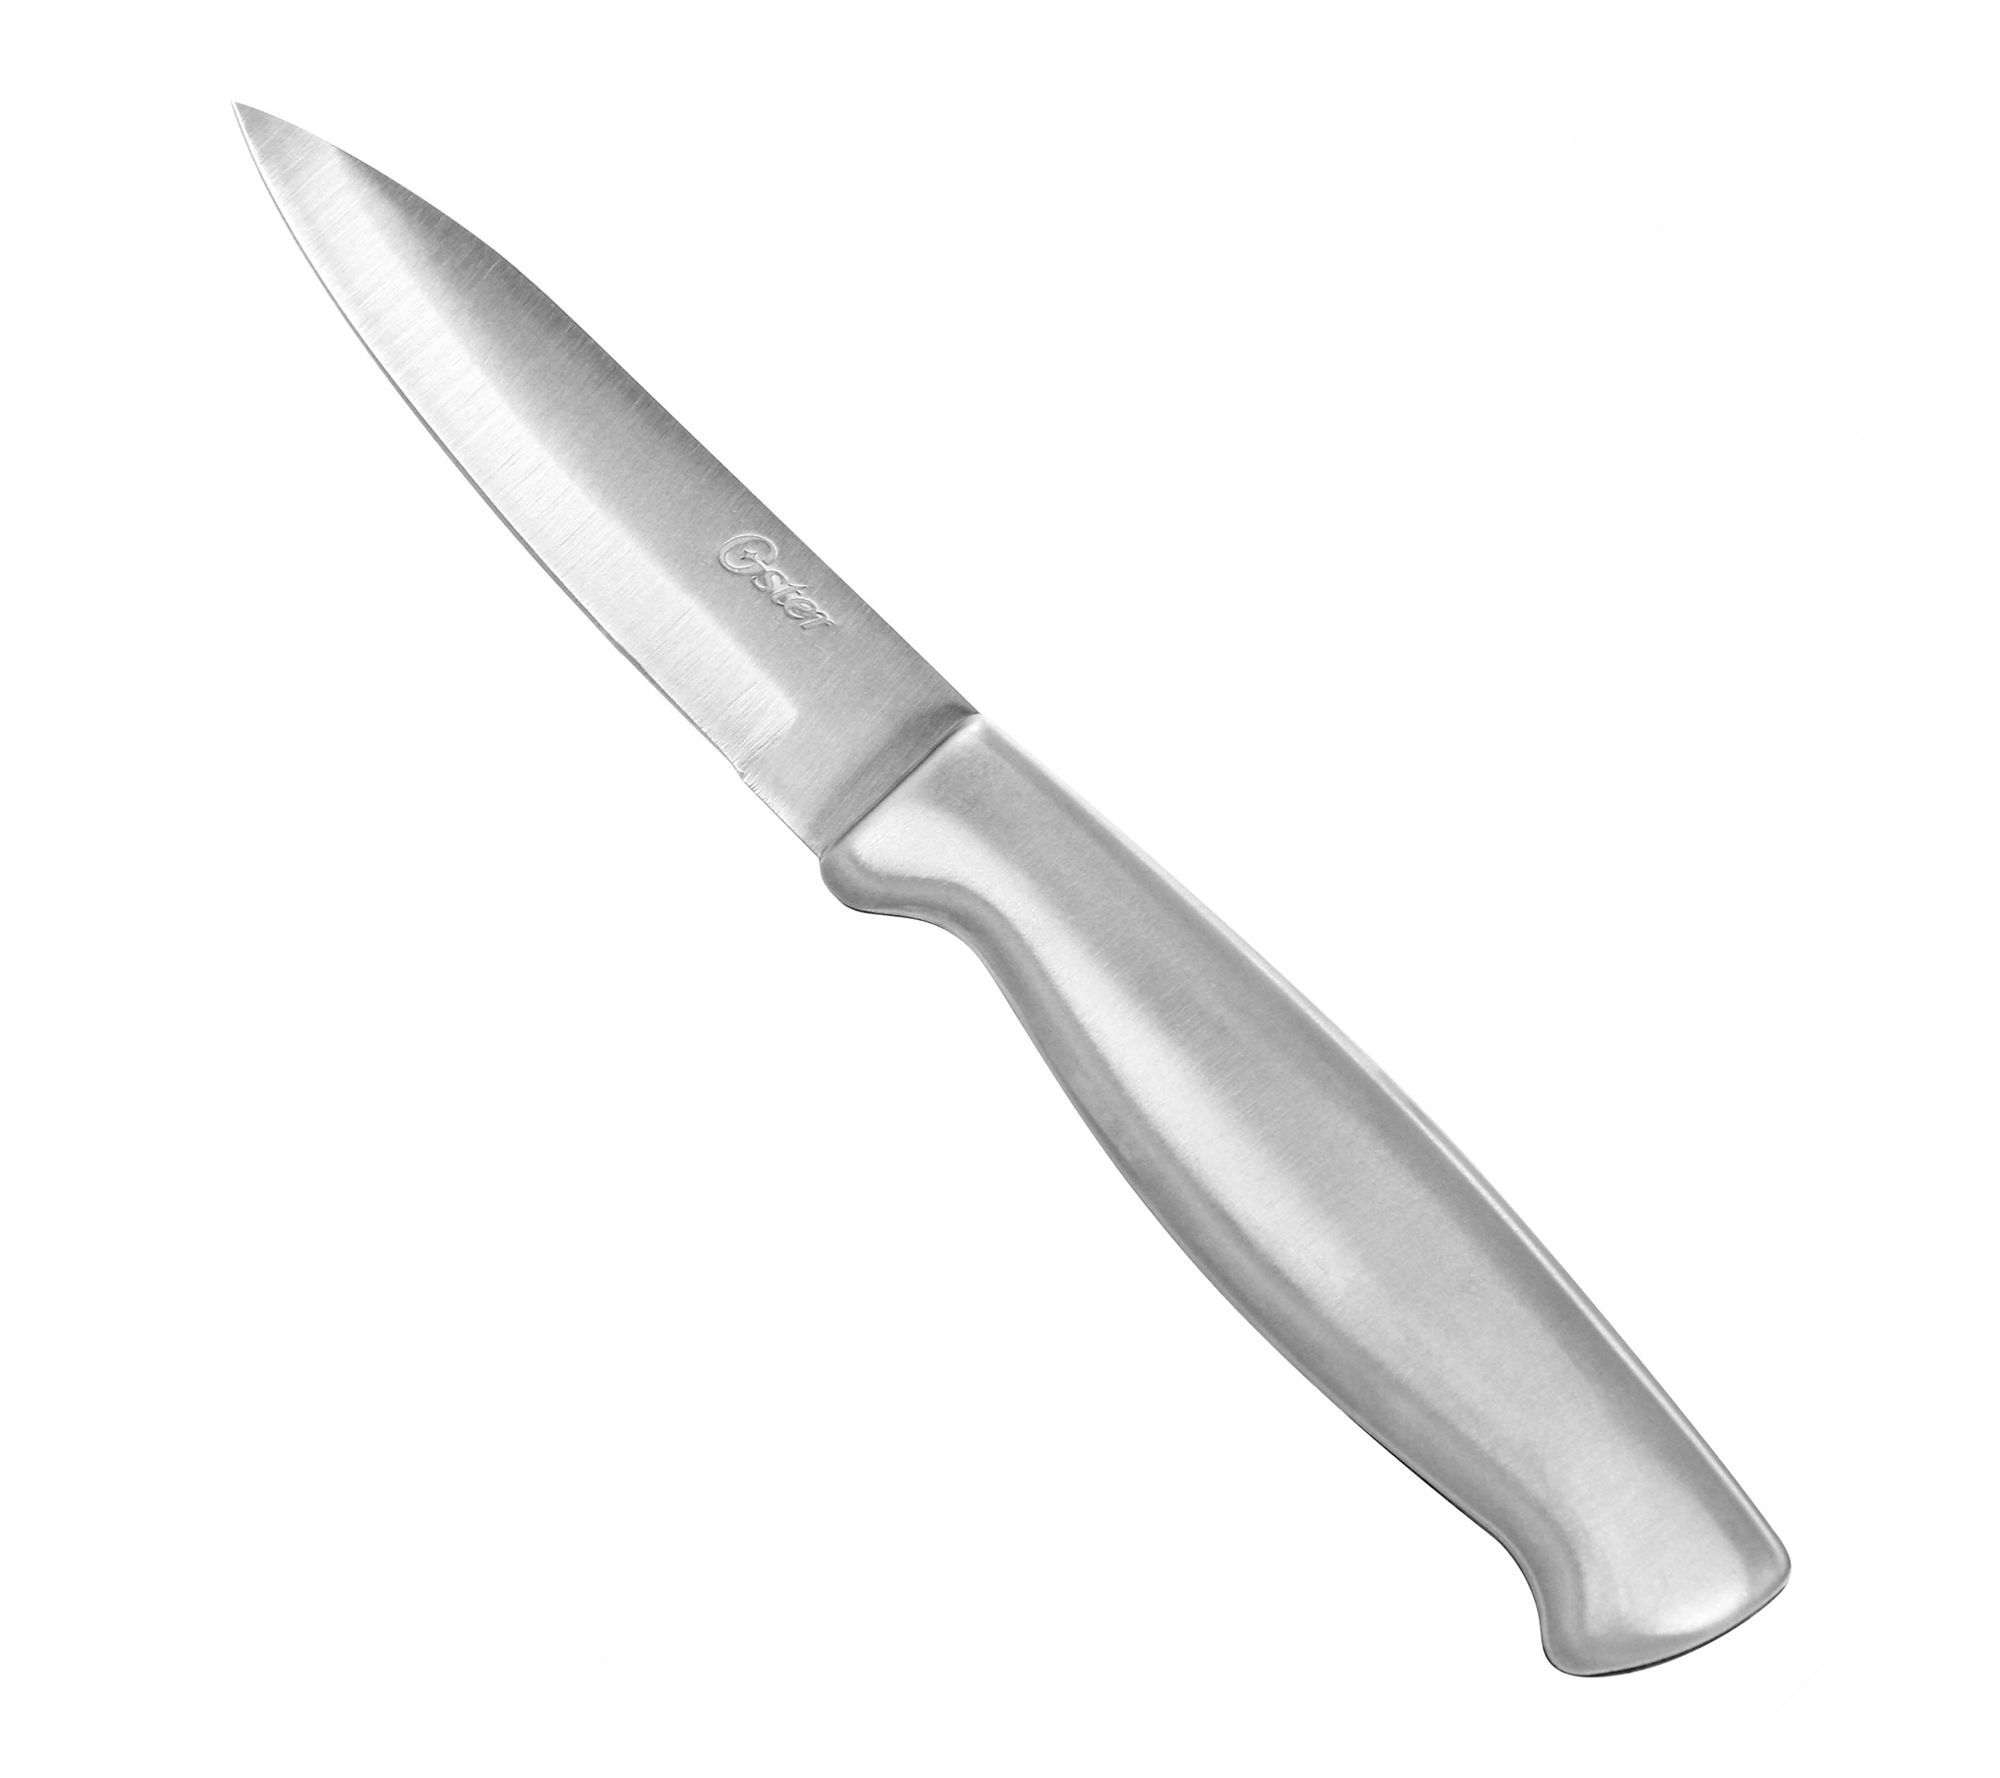 Berghoff Contempo 6pc German Steel Knife Set, Wood Case, 3 Stage Sharpener  : Target